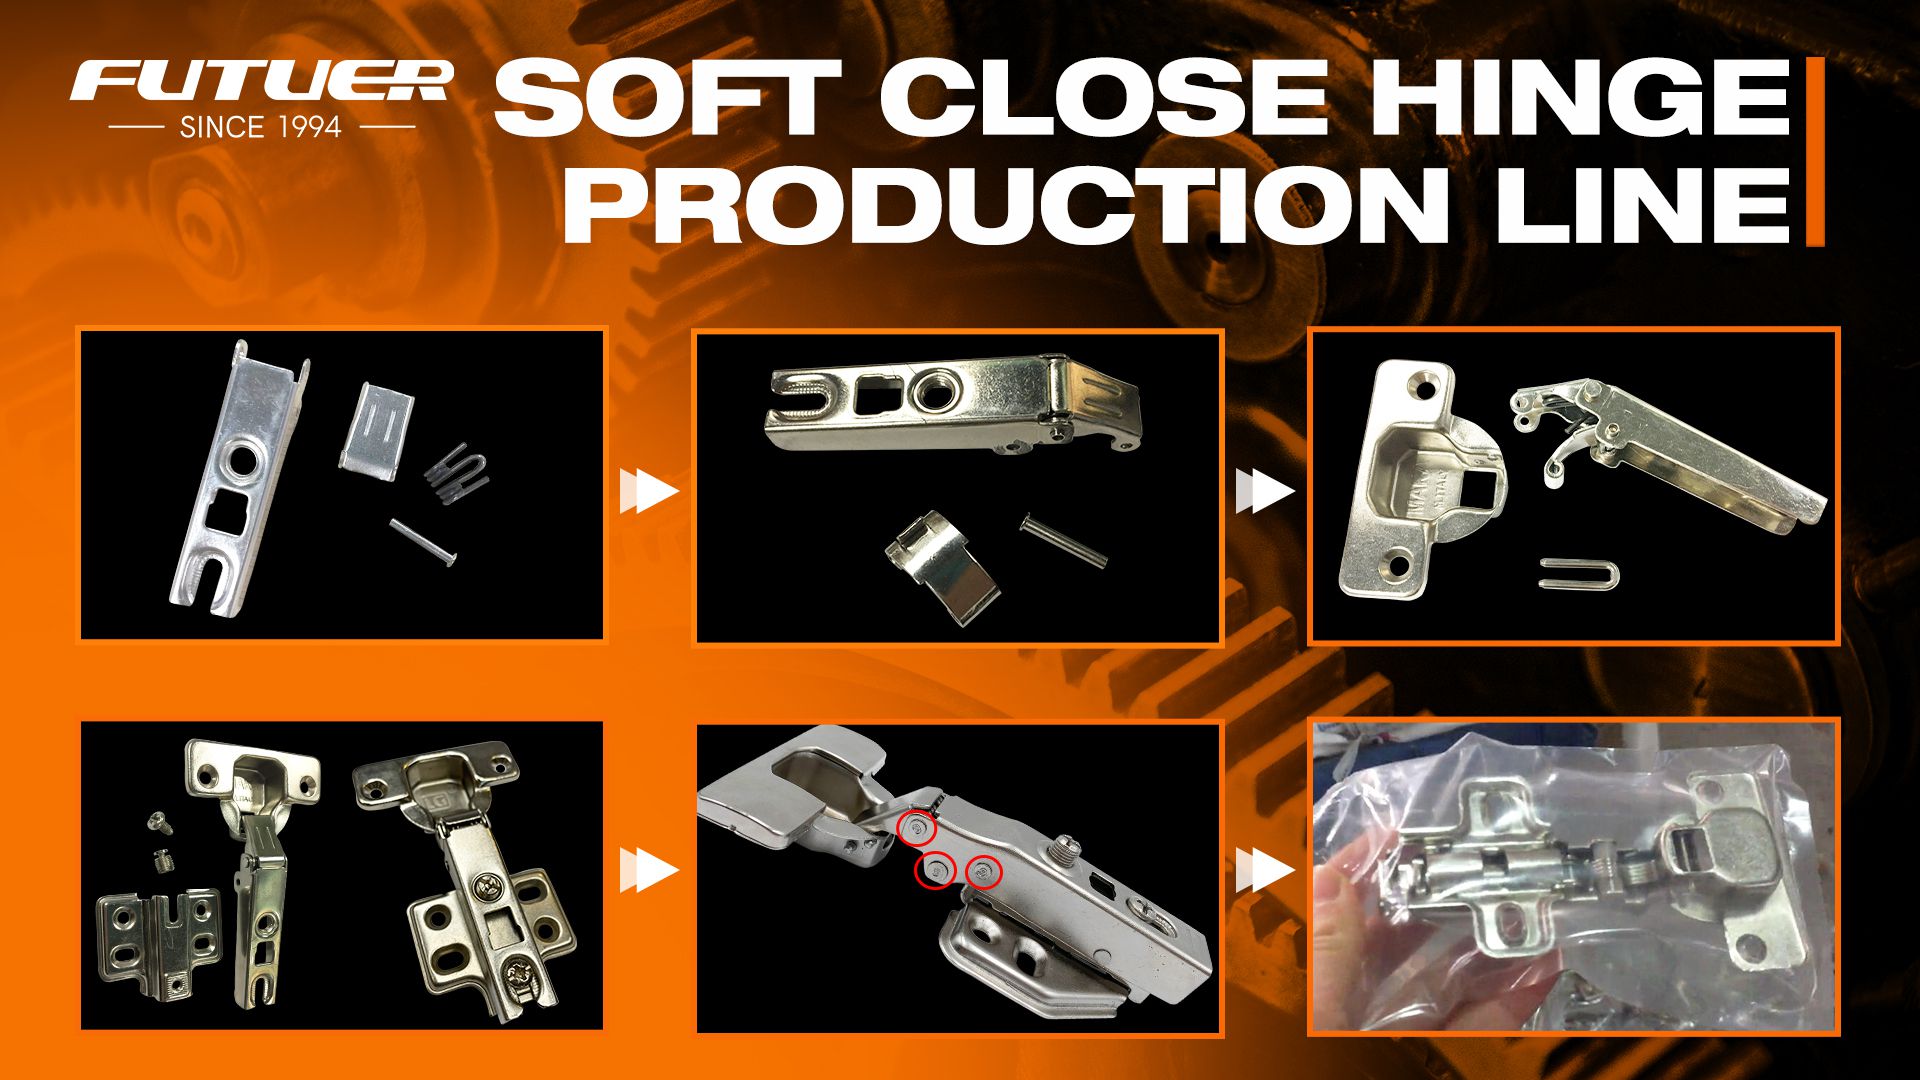 Ordinary hinge semi-automatic production line